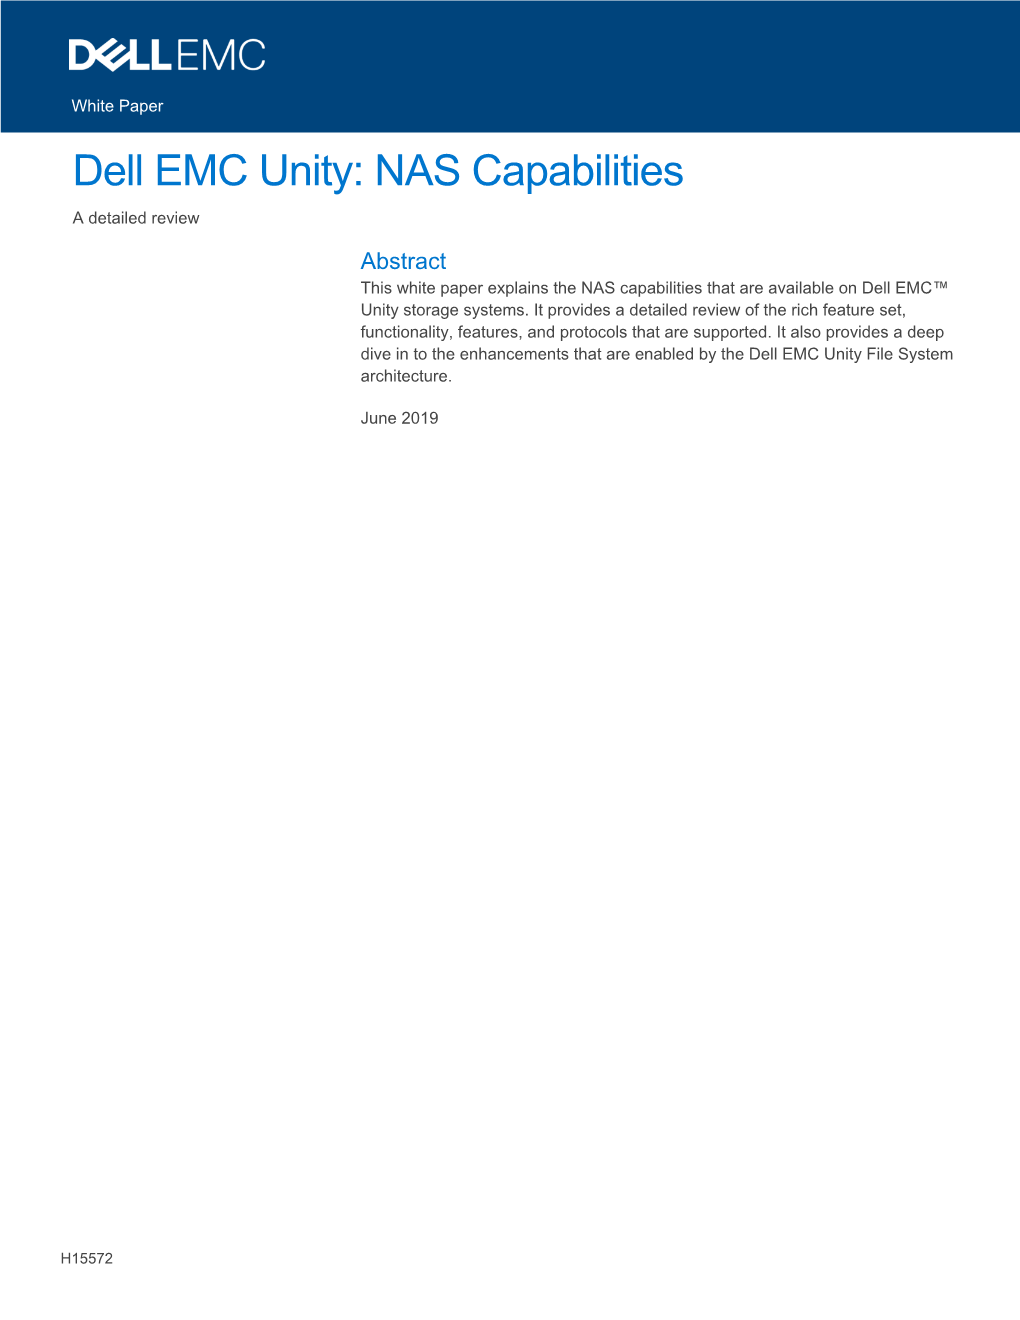 Dell EMC Unity: NAS Capabilities White Paper